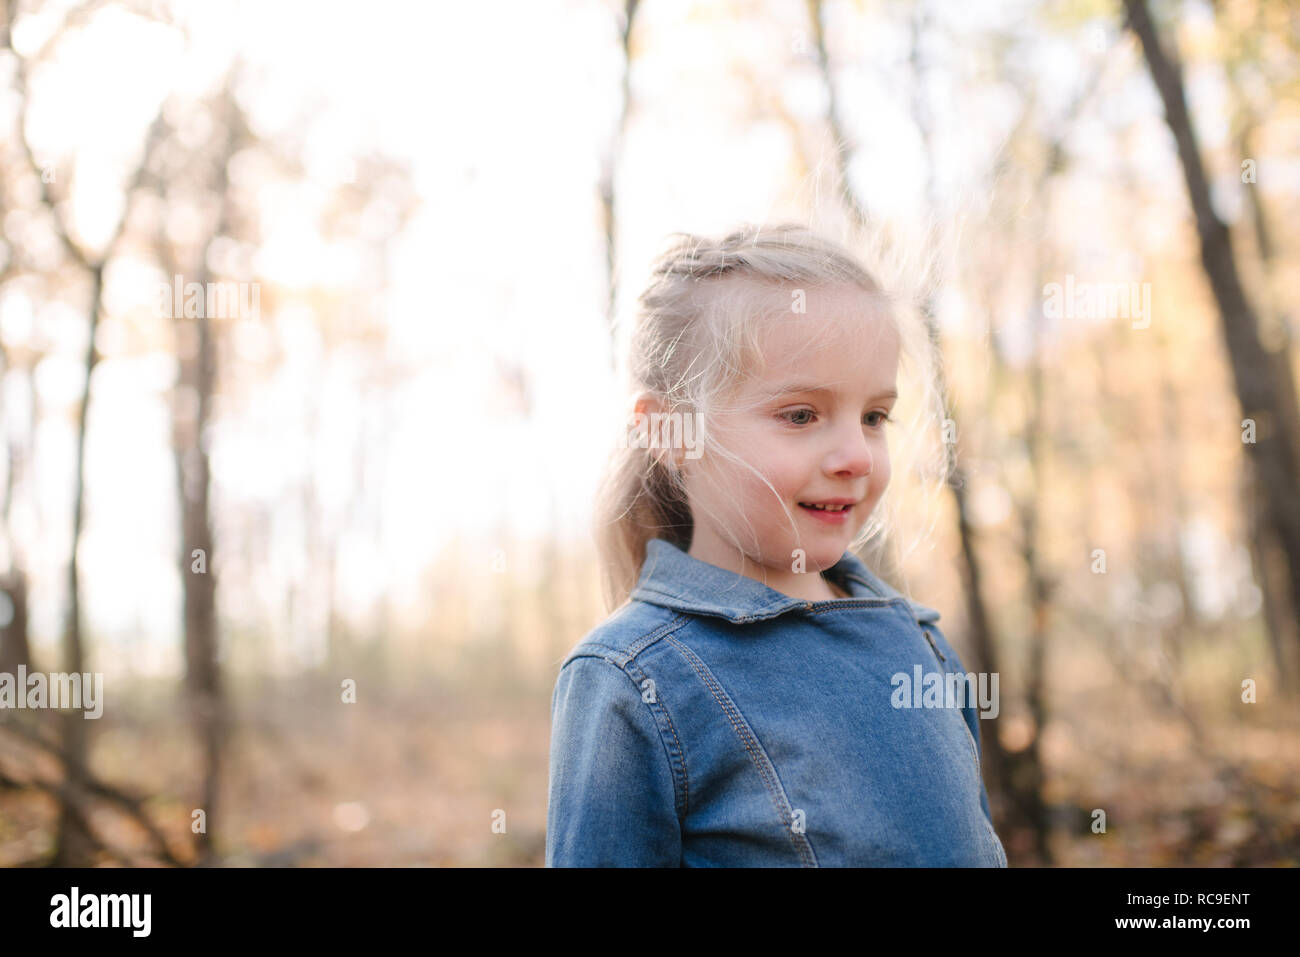 Little girl exploring forest Stock Photo